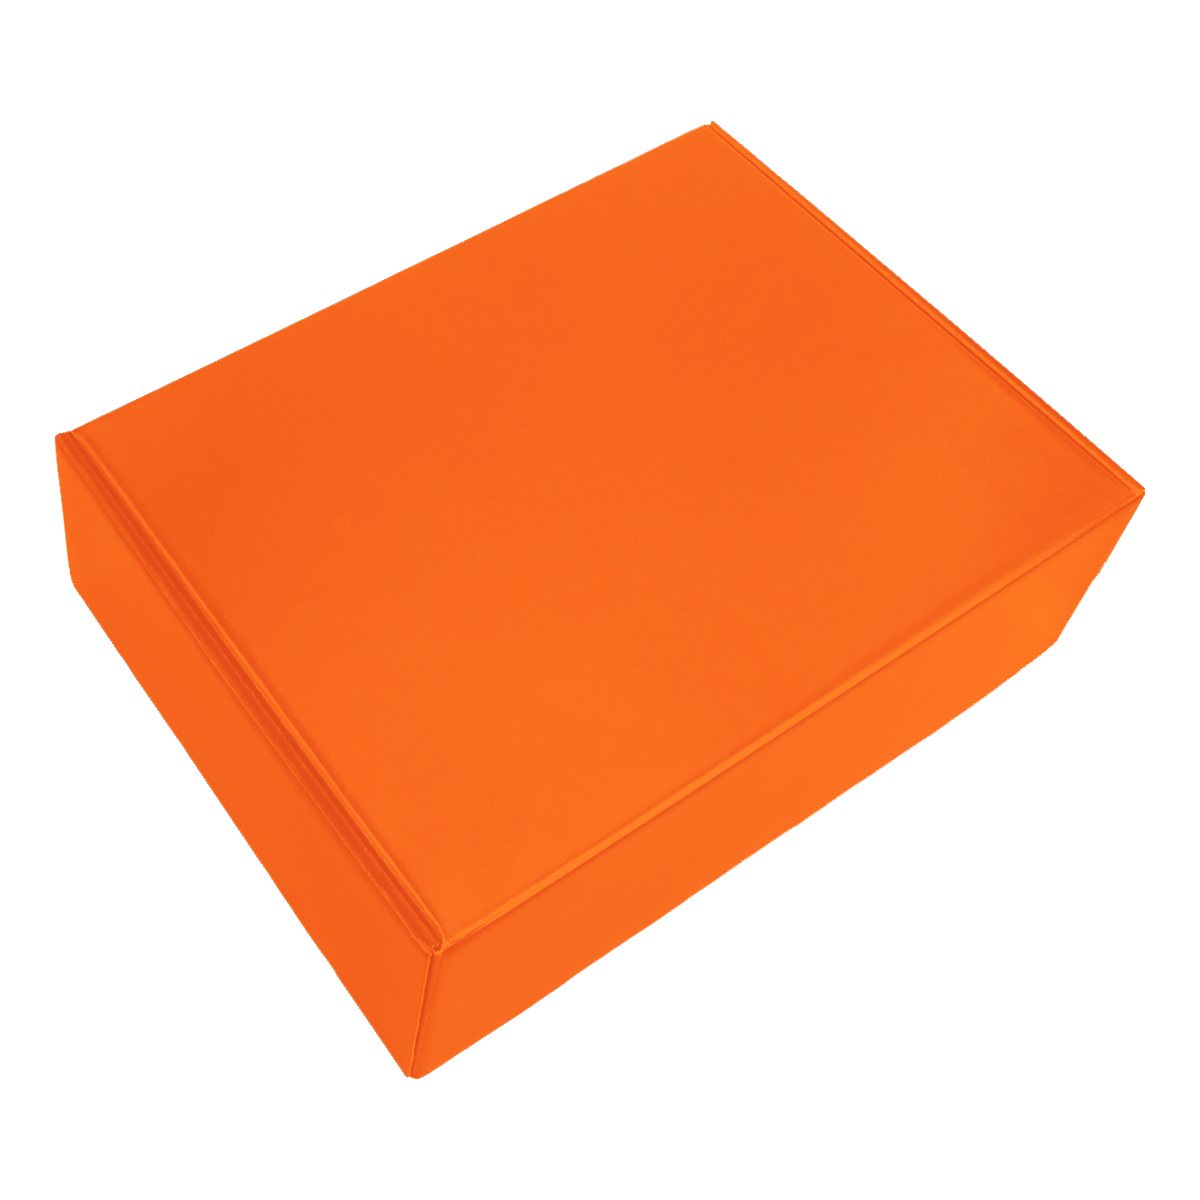 Коробка Hot Box (оранжевая), оранжевый